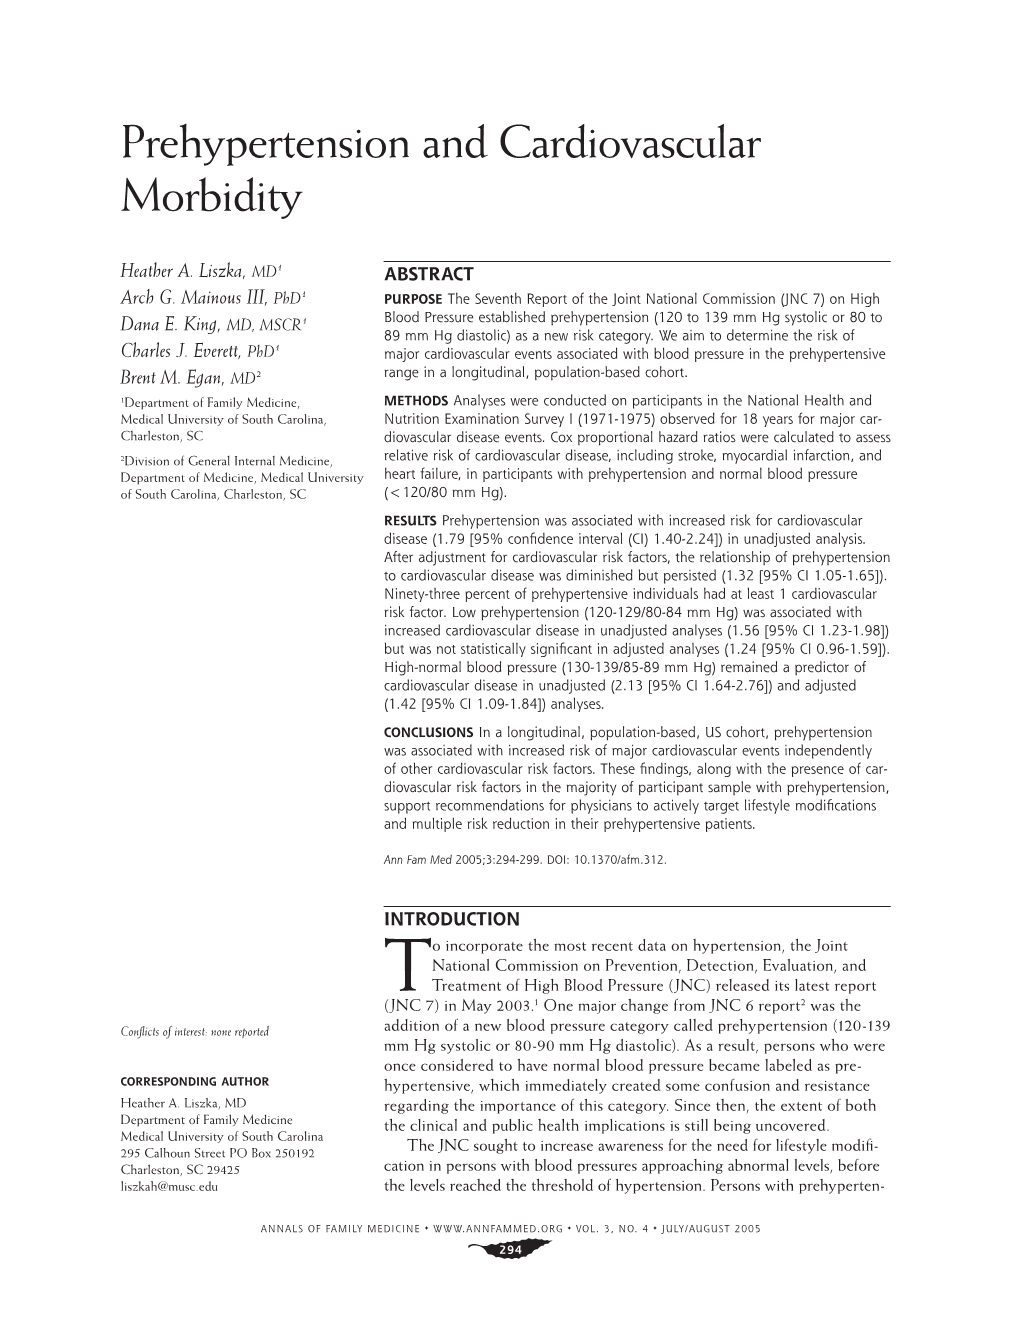 Prehypertension and Cardiovascular Morbidity